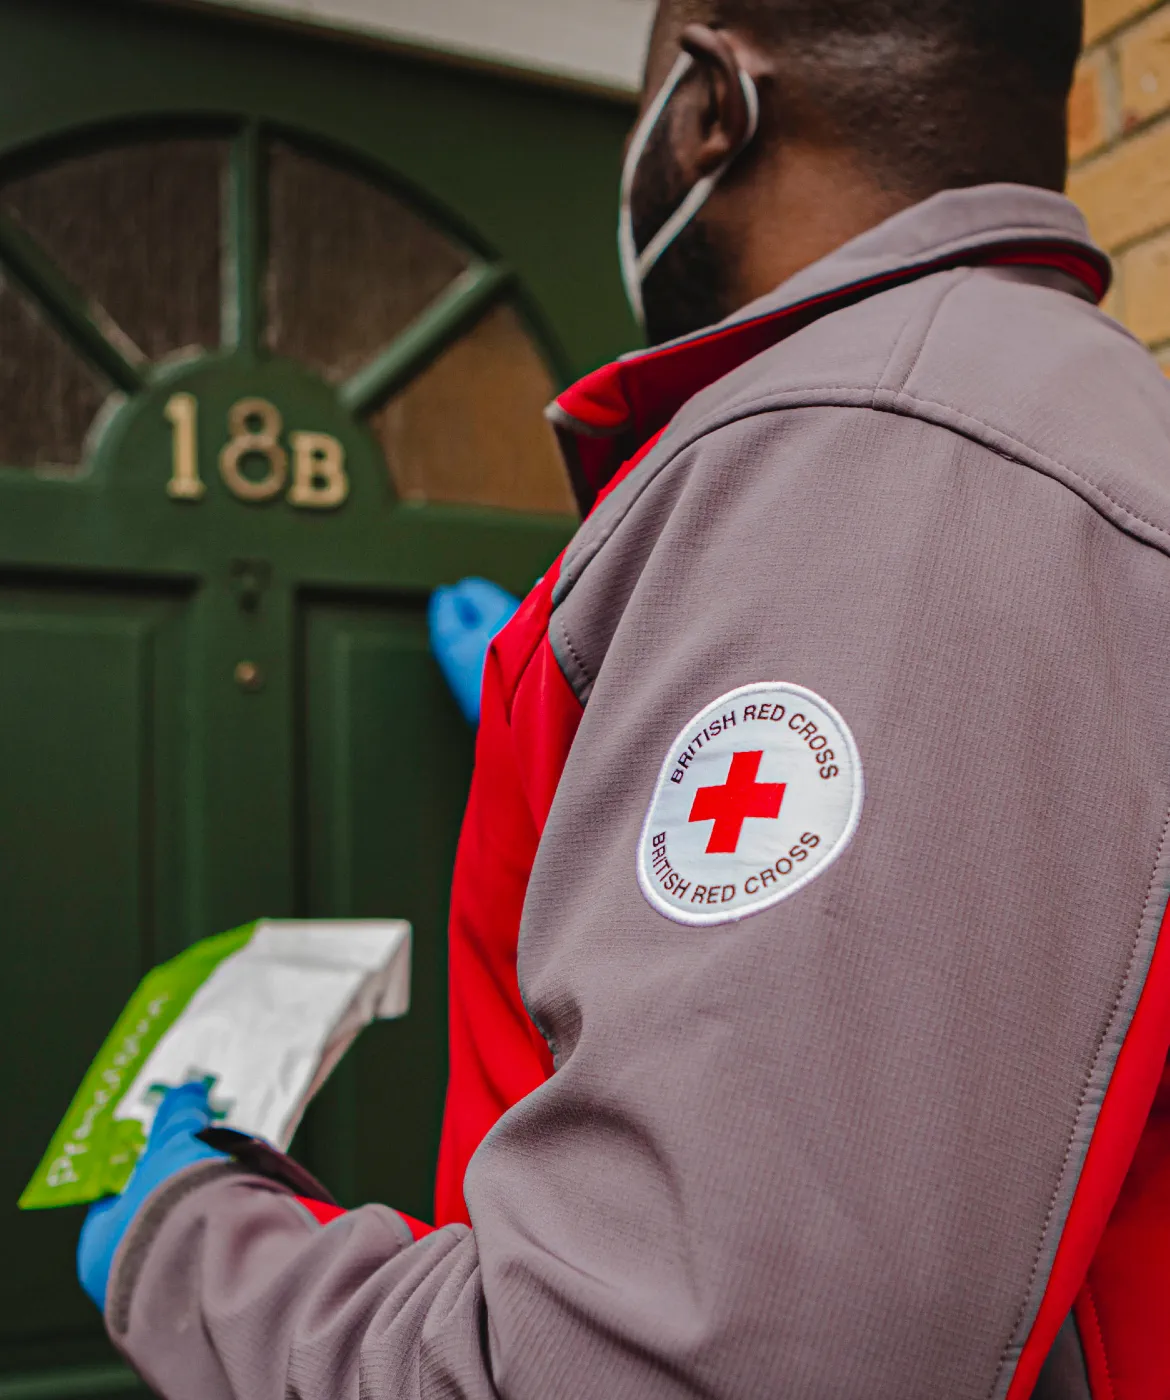 Emergency Response volunteer, Emmanuel, knocking on the door to deliver a prescription